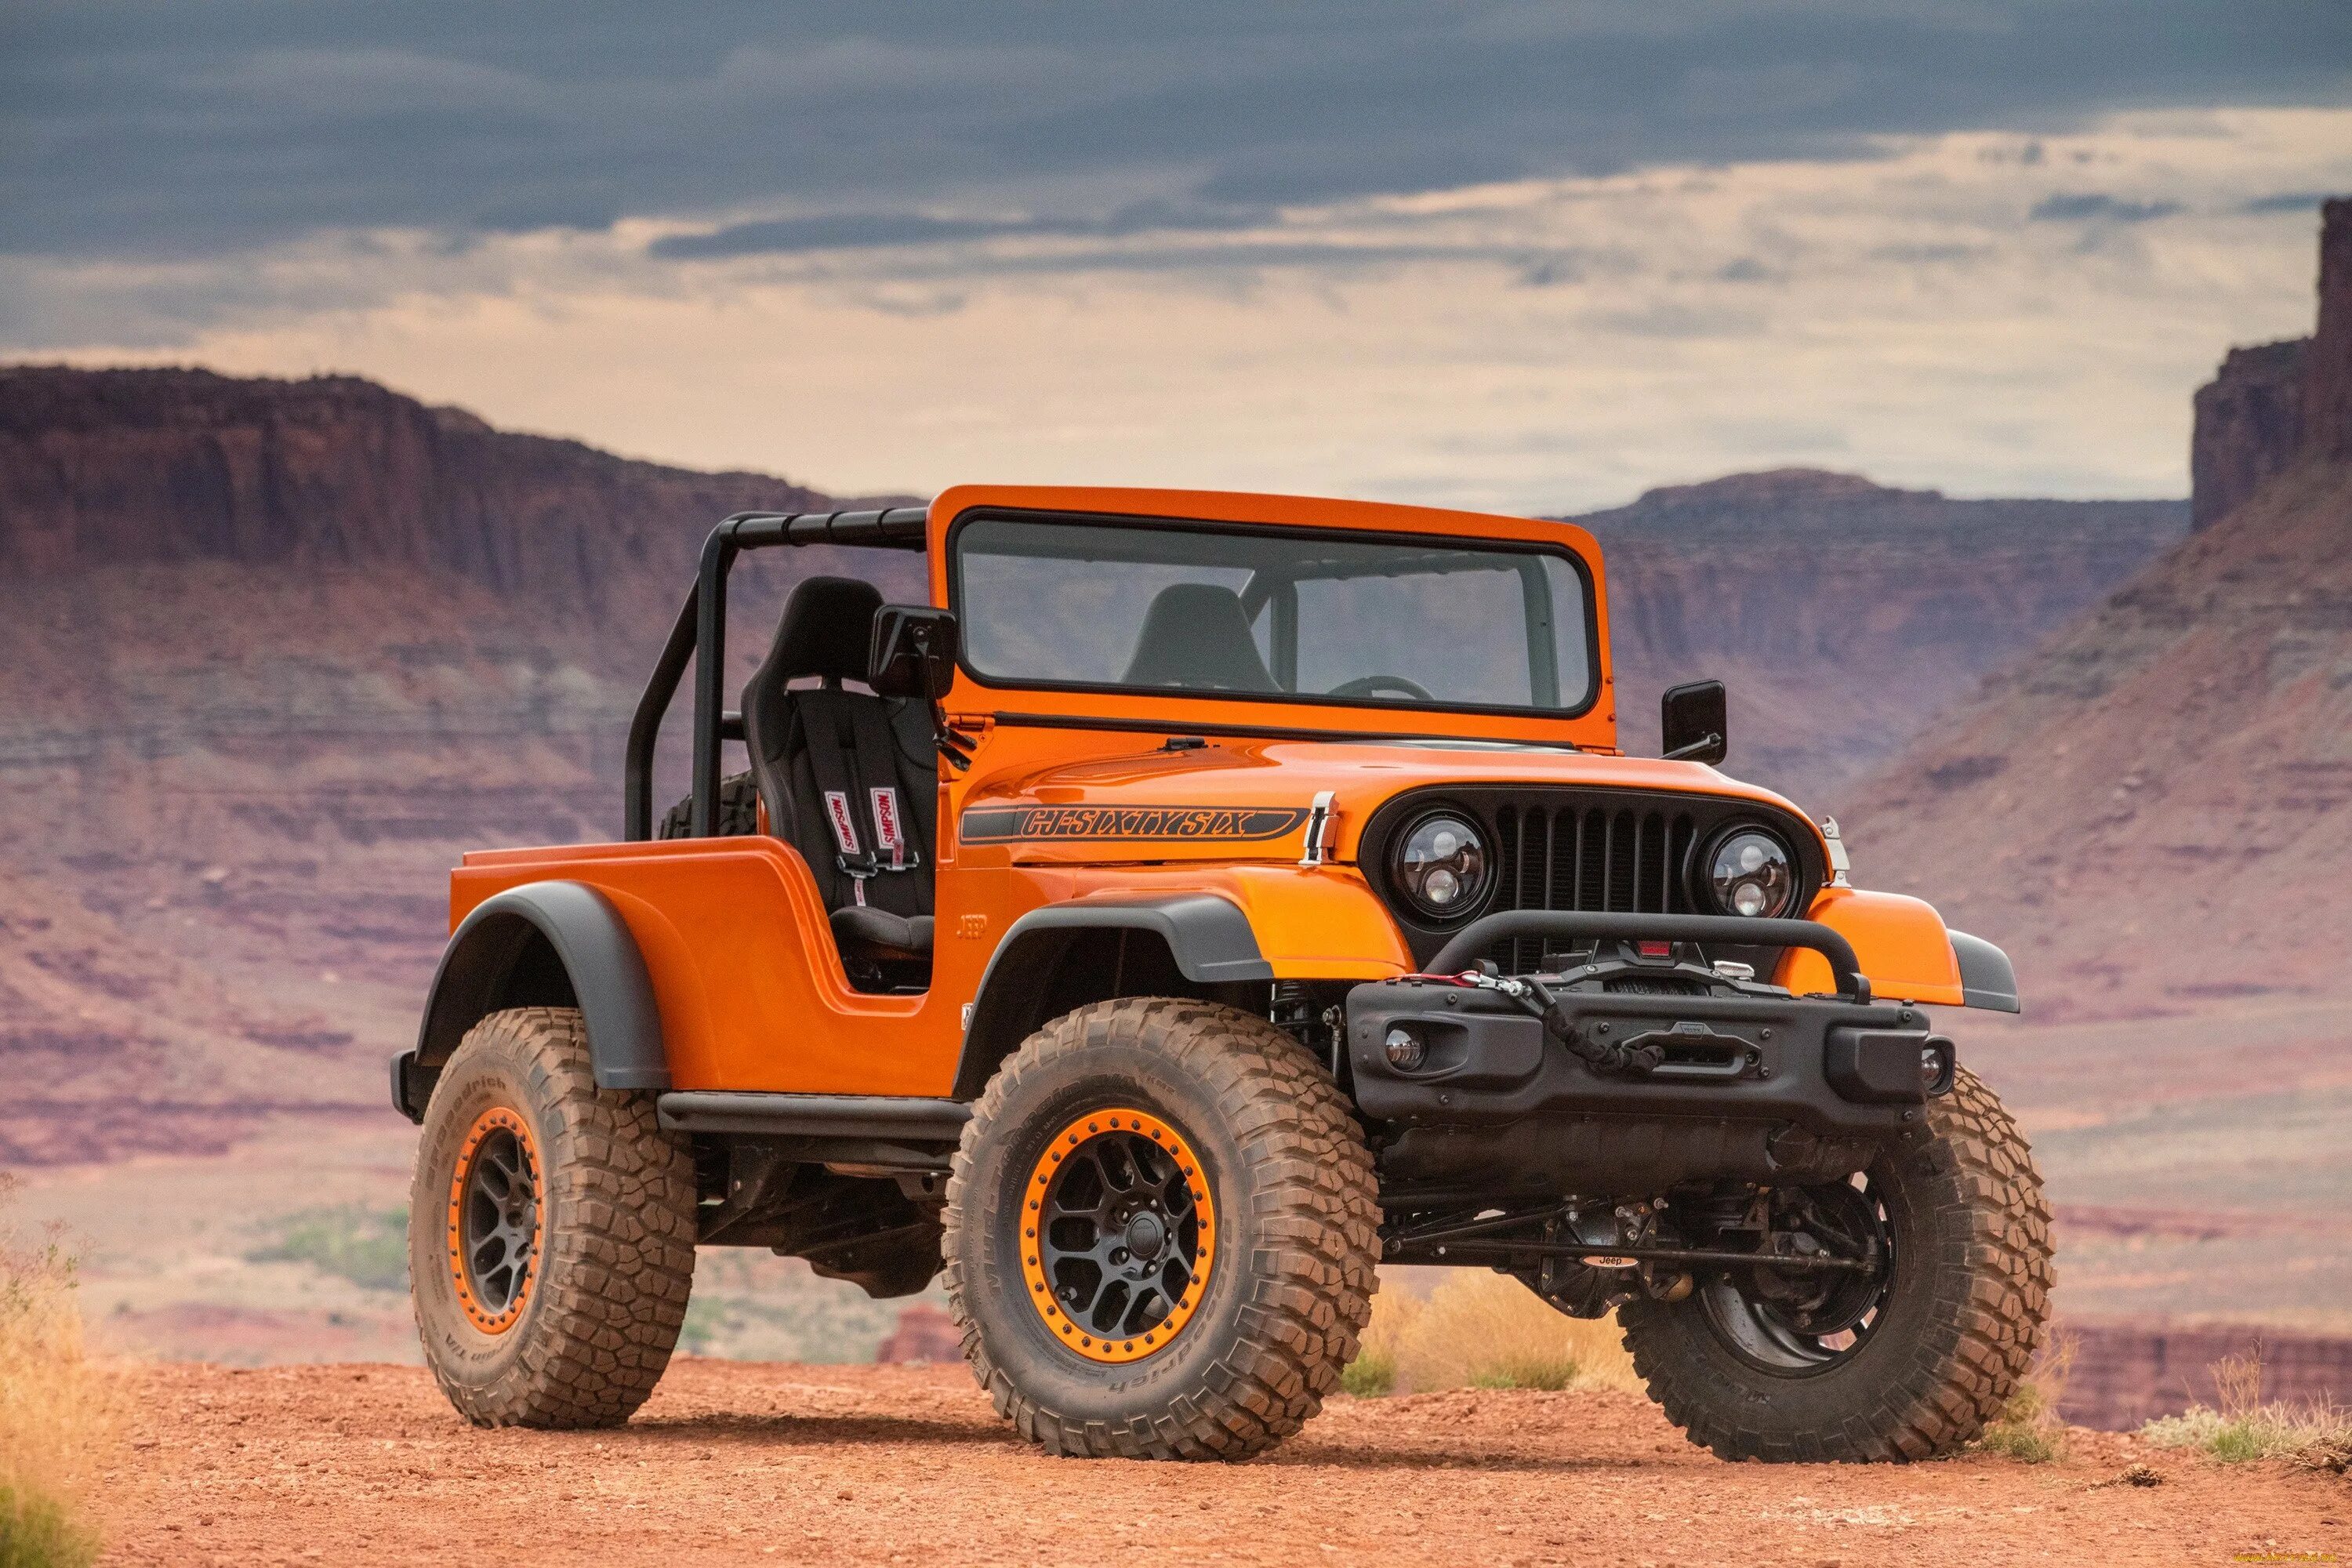 Jeep cj66. Jeep Вранглер оранжевый. Джип Вранглер сафари. 2022 Jeep Wrangler Willys. Что такое внедорожник